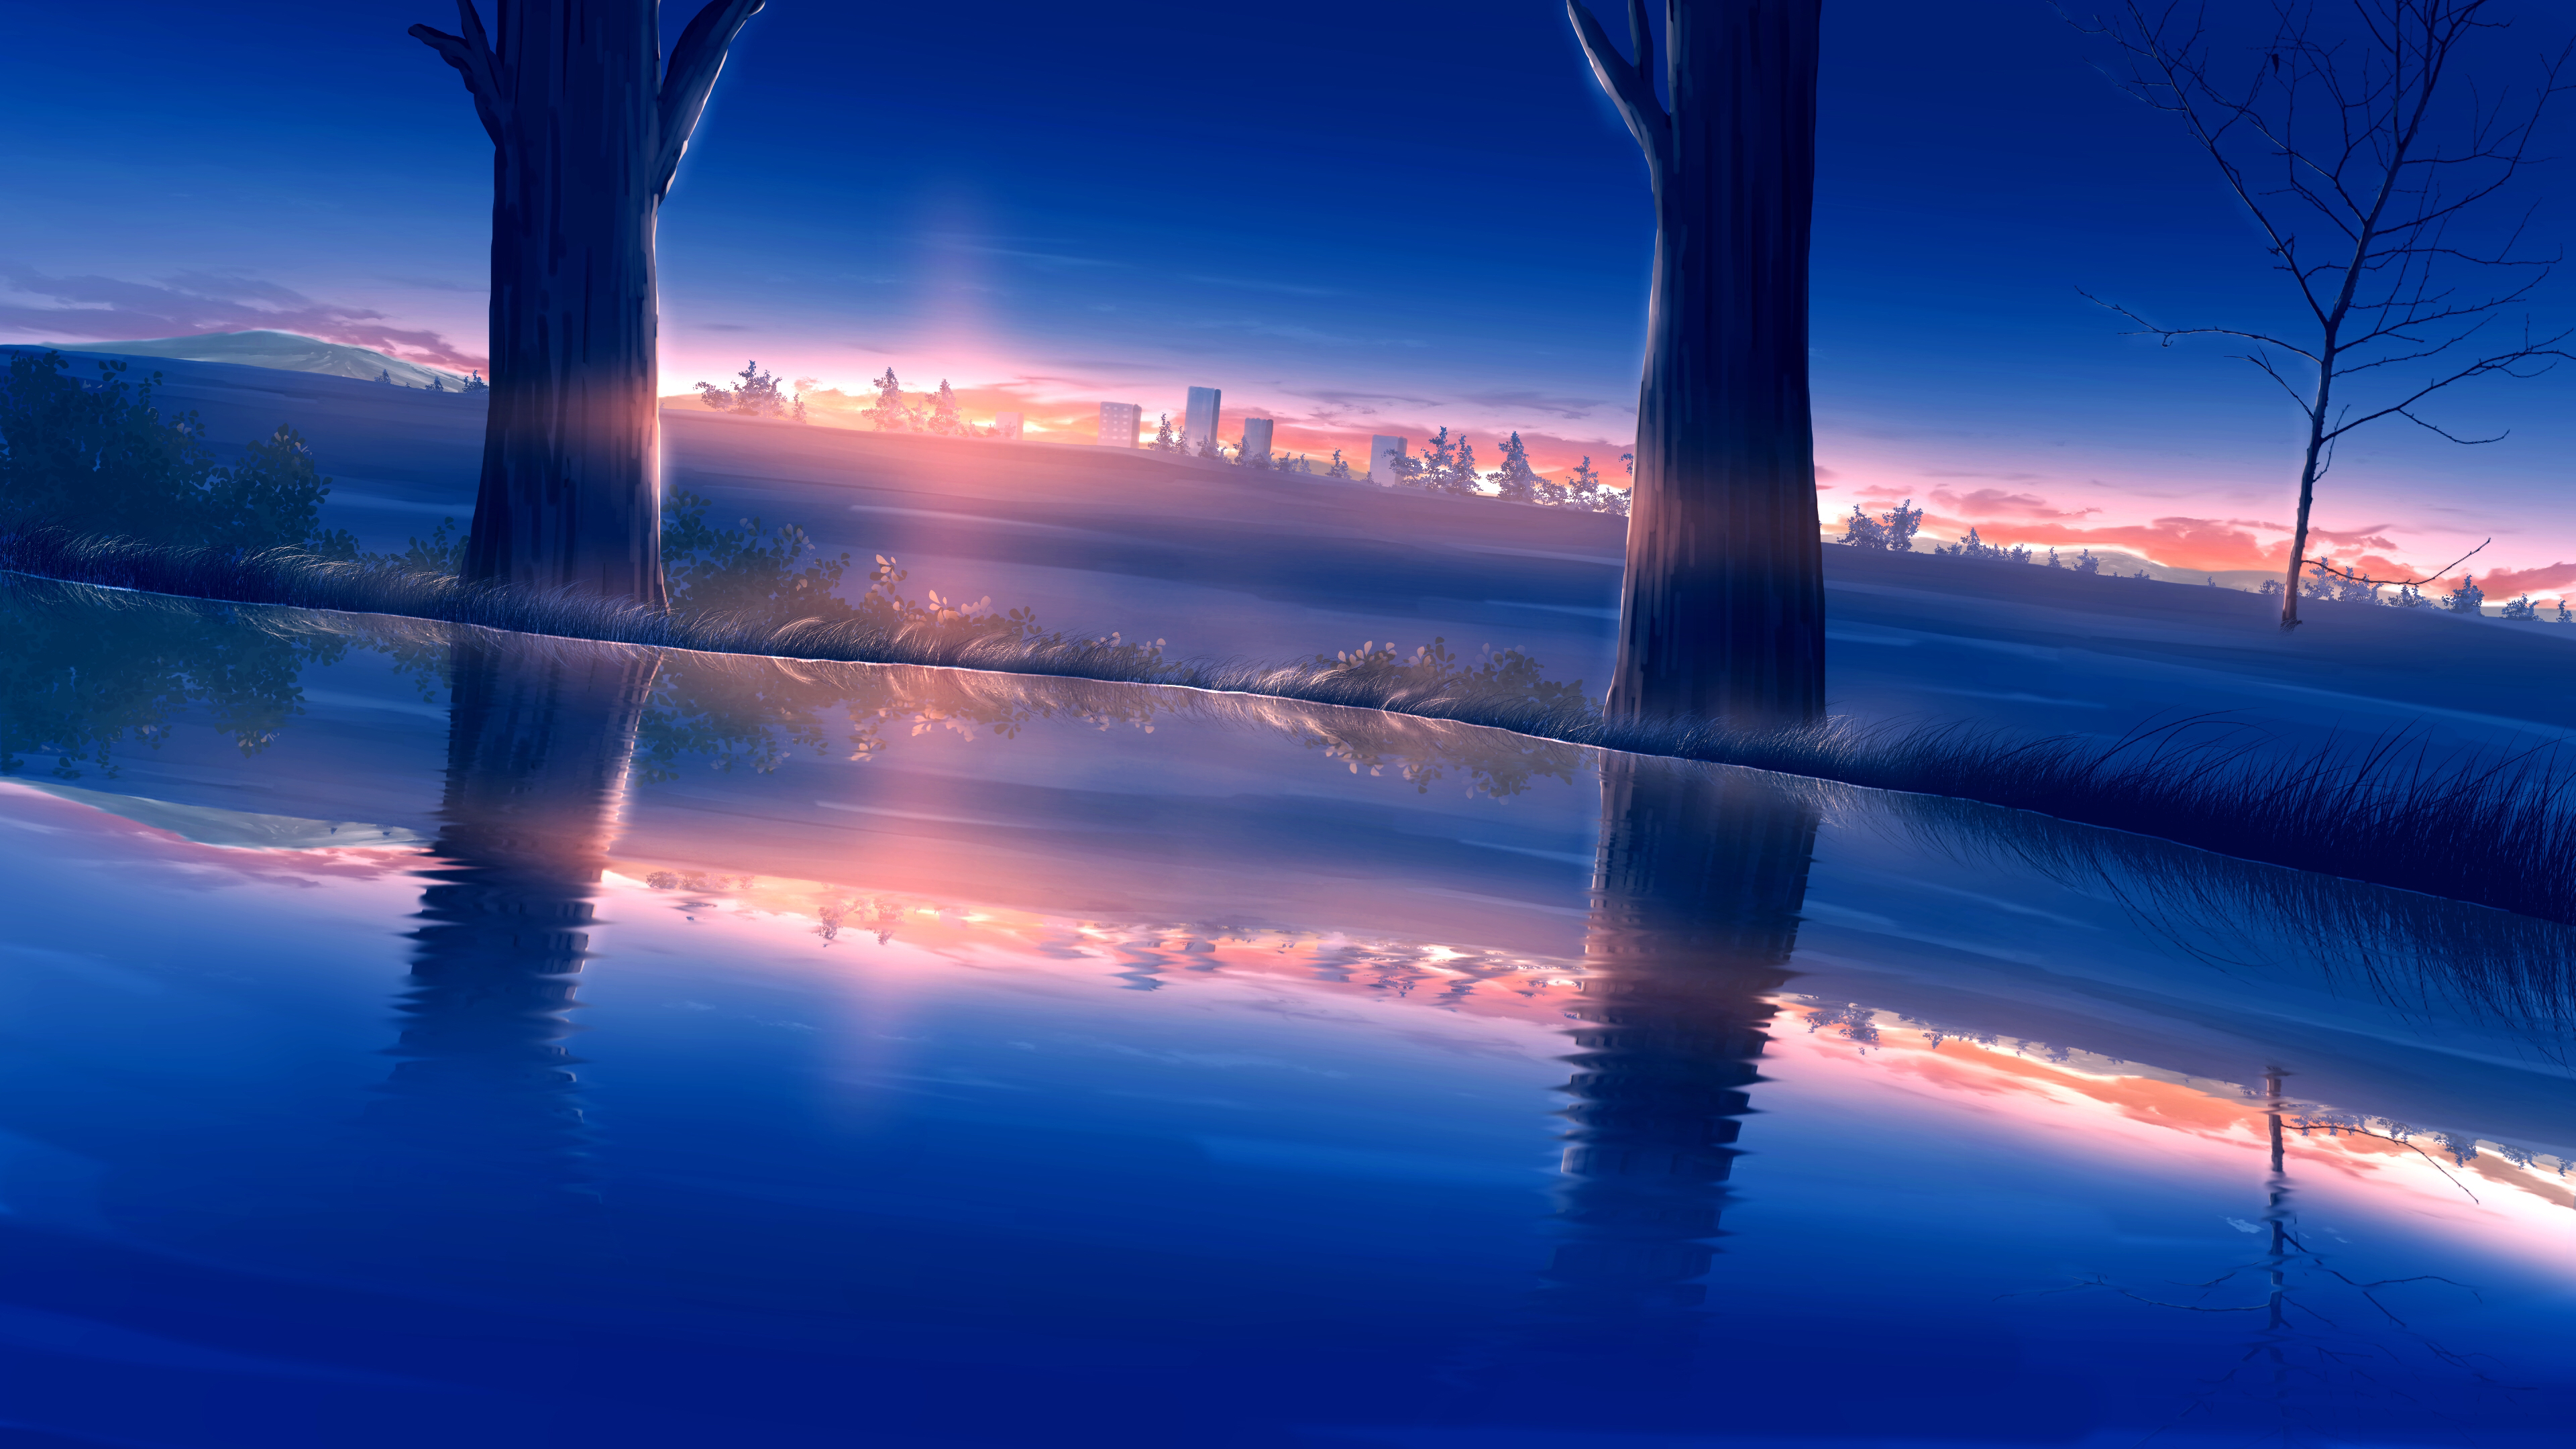 Anime Sunset 4k Ultra HD Wallpaper by furi / ふーり